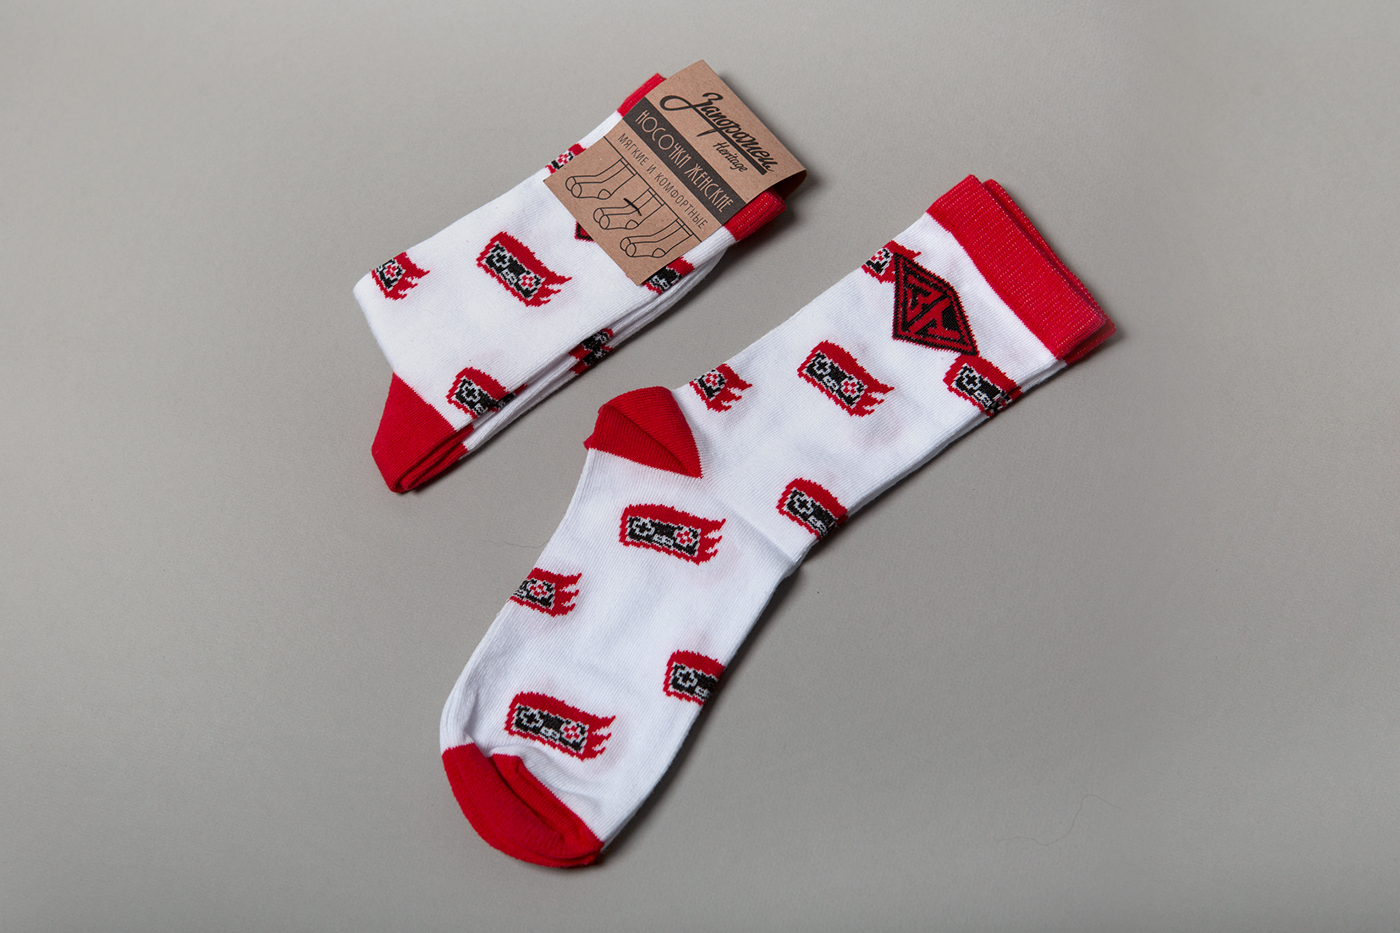 Zaporozhec socks 8 bit console pattern паттерн носки Запорожец clothes одежда